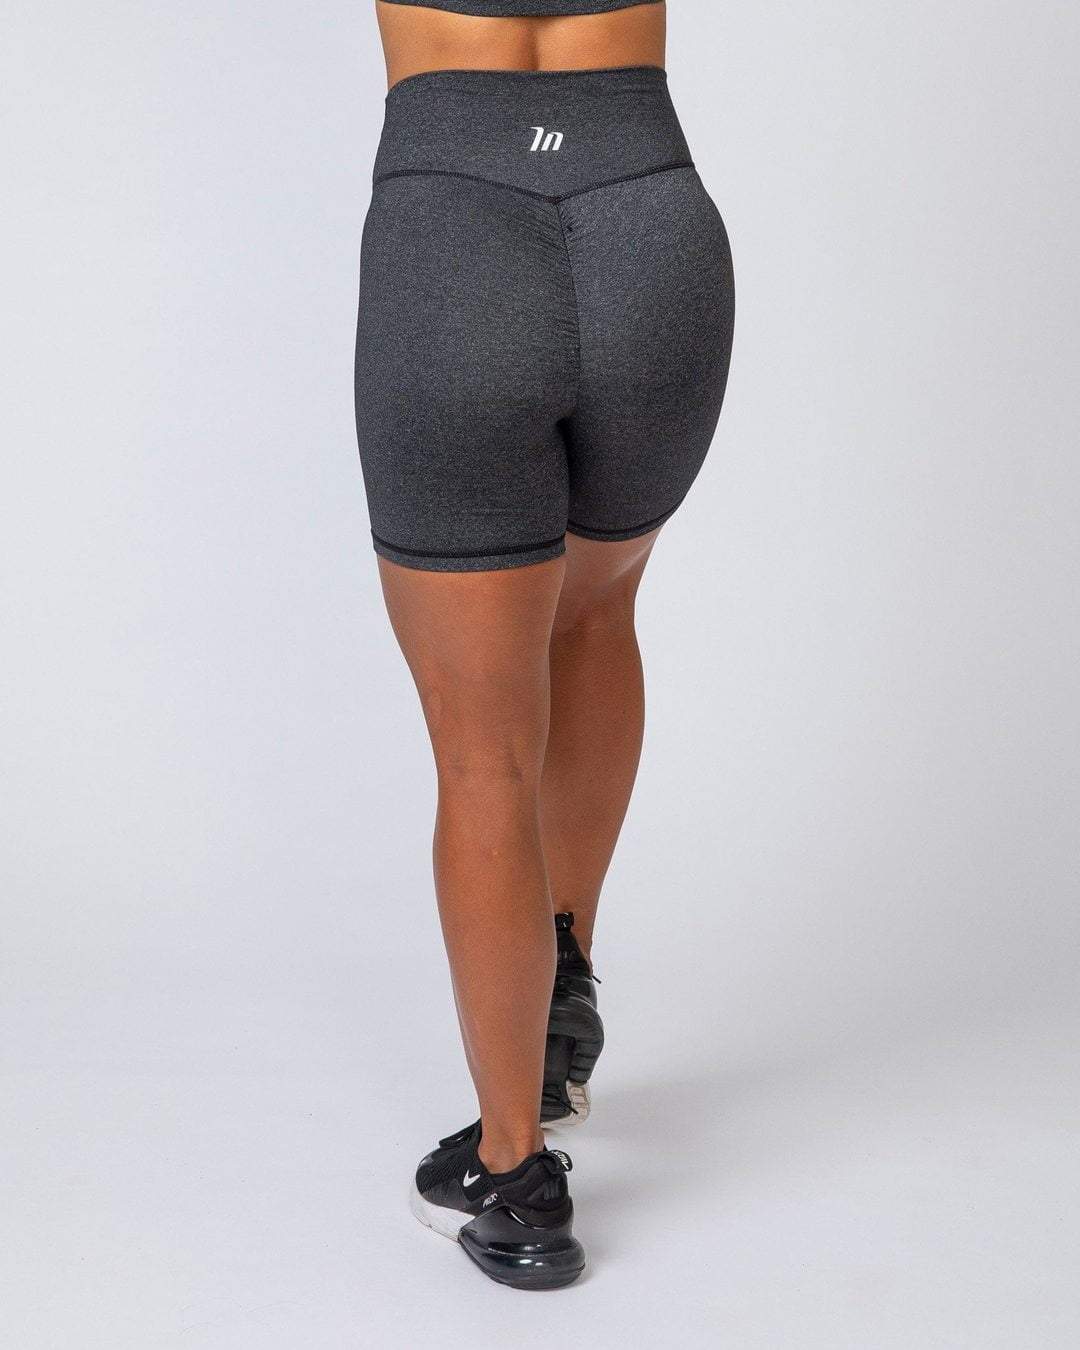 musclenation Bike Shorts - Heather Black